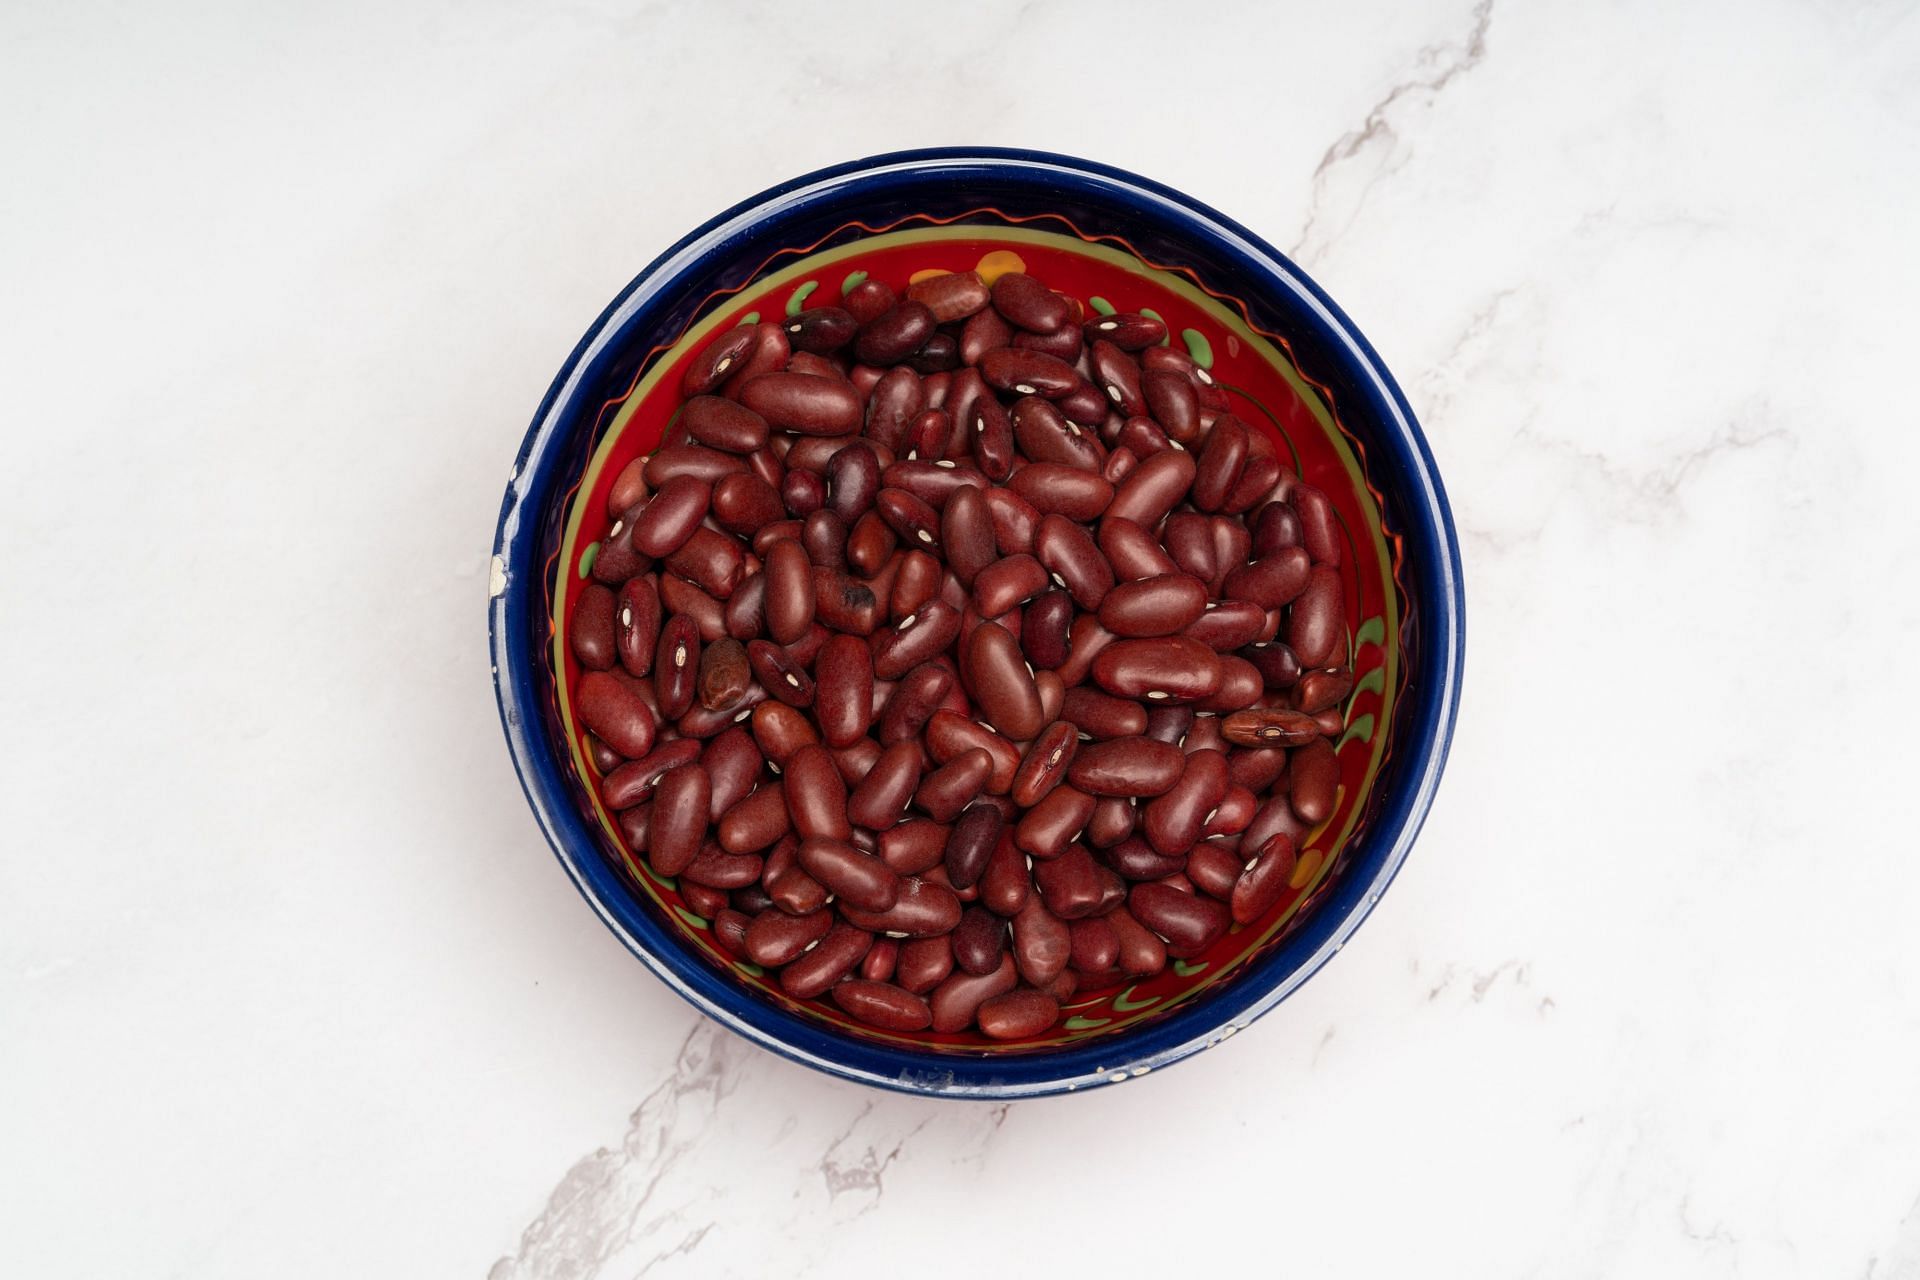 Regulate your blood pressure with potassium-rich beans. (Image via Pexels/ Markus Winkler)